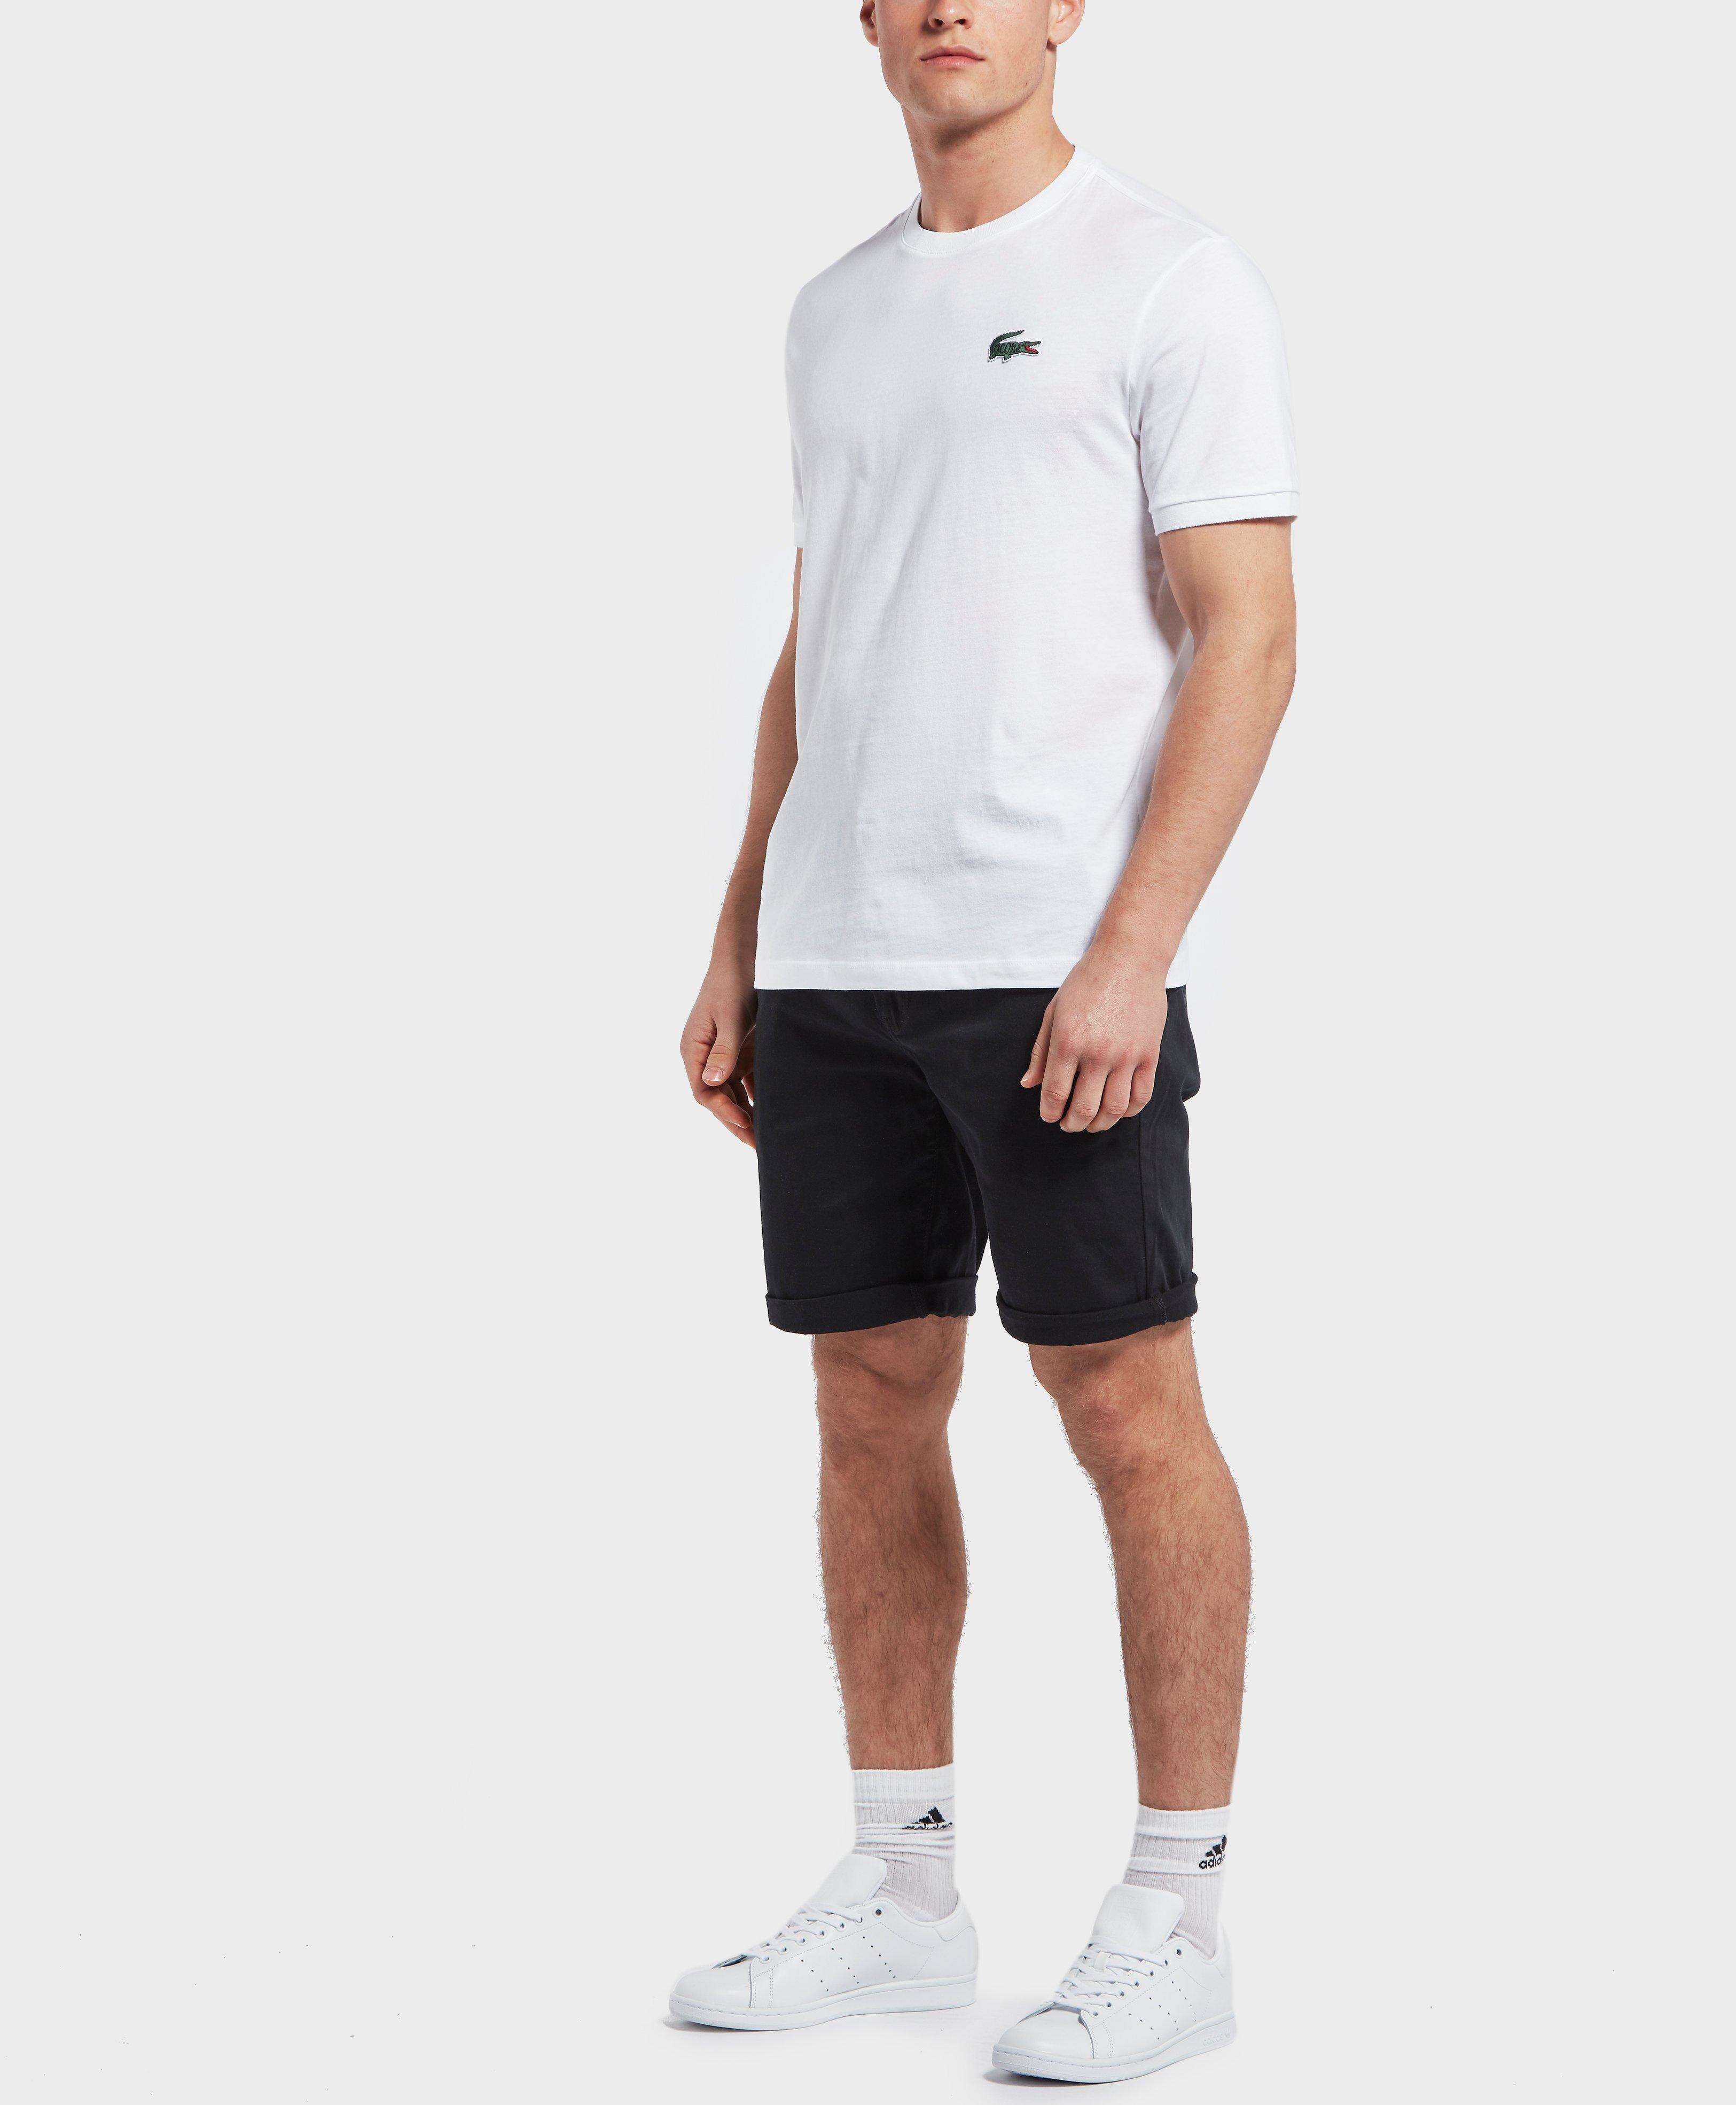 Lacoste Mens Sport Short Sleeve Premium Animated Transfer Croc T-Shirt